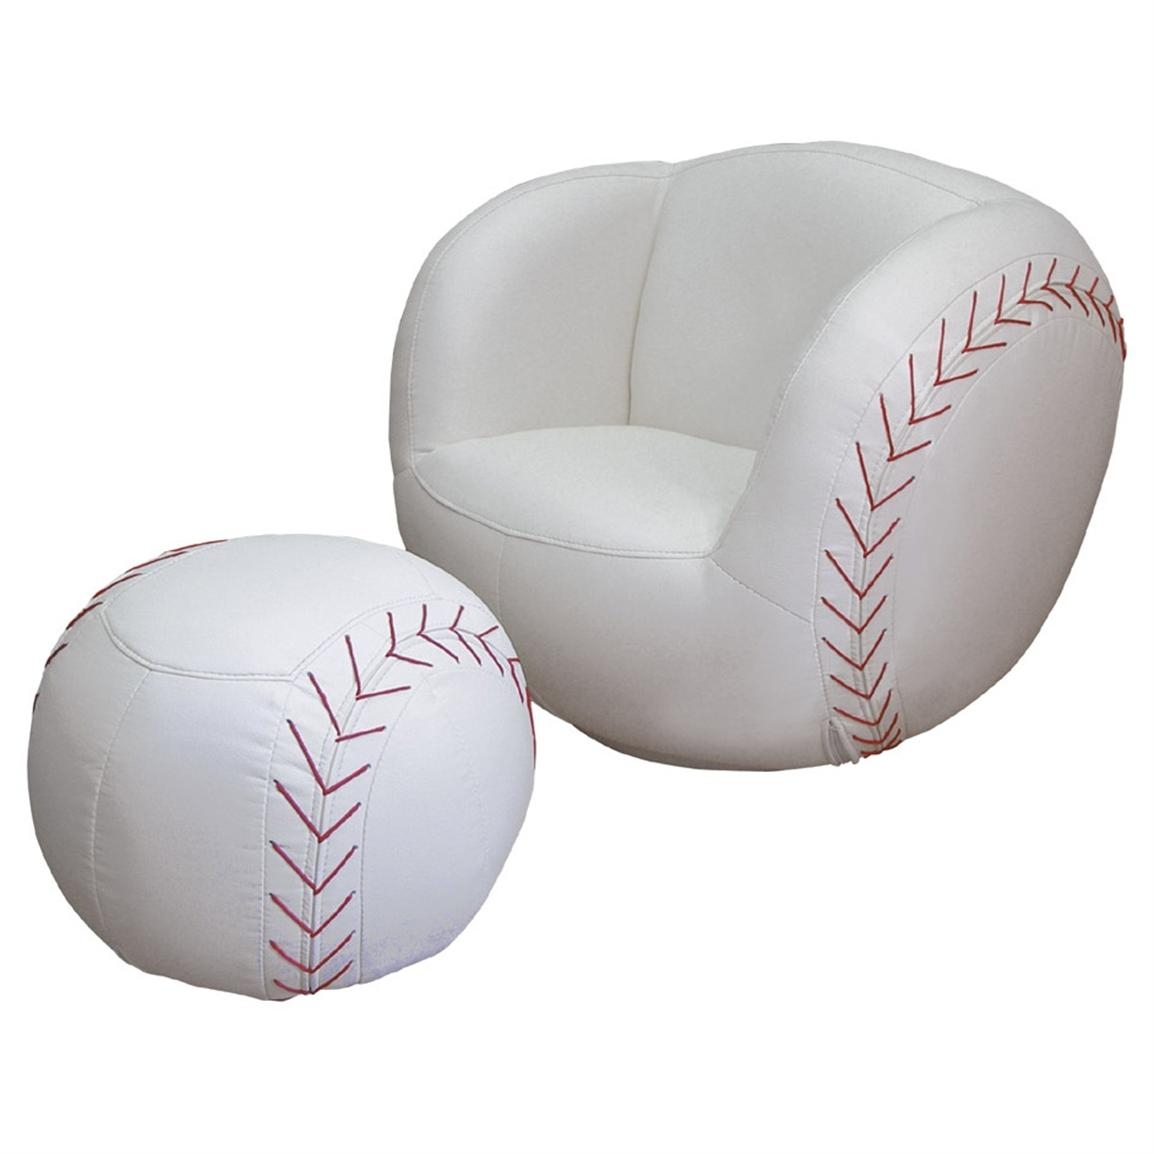 Baseball Bean Bag Chair Ideas on Foter